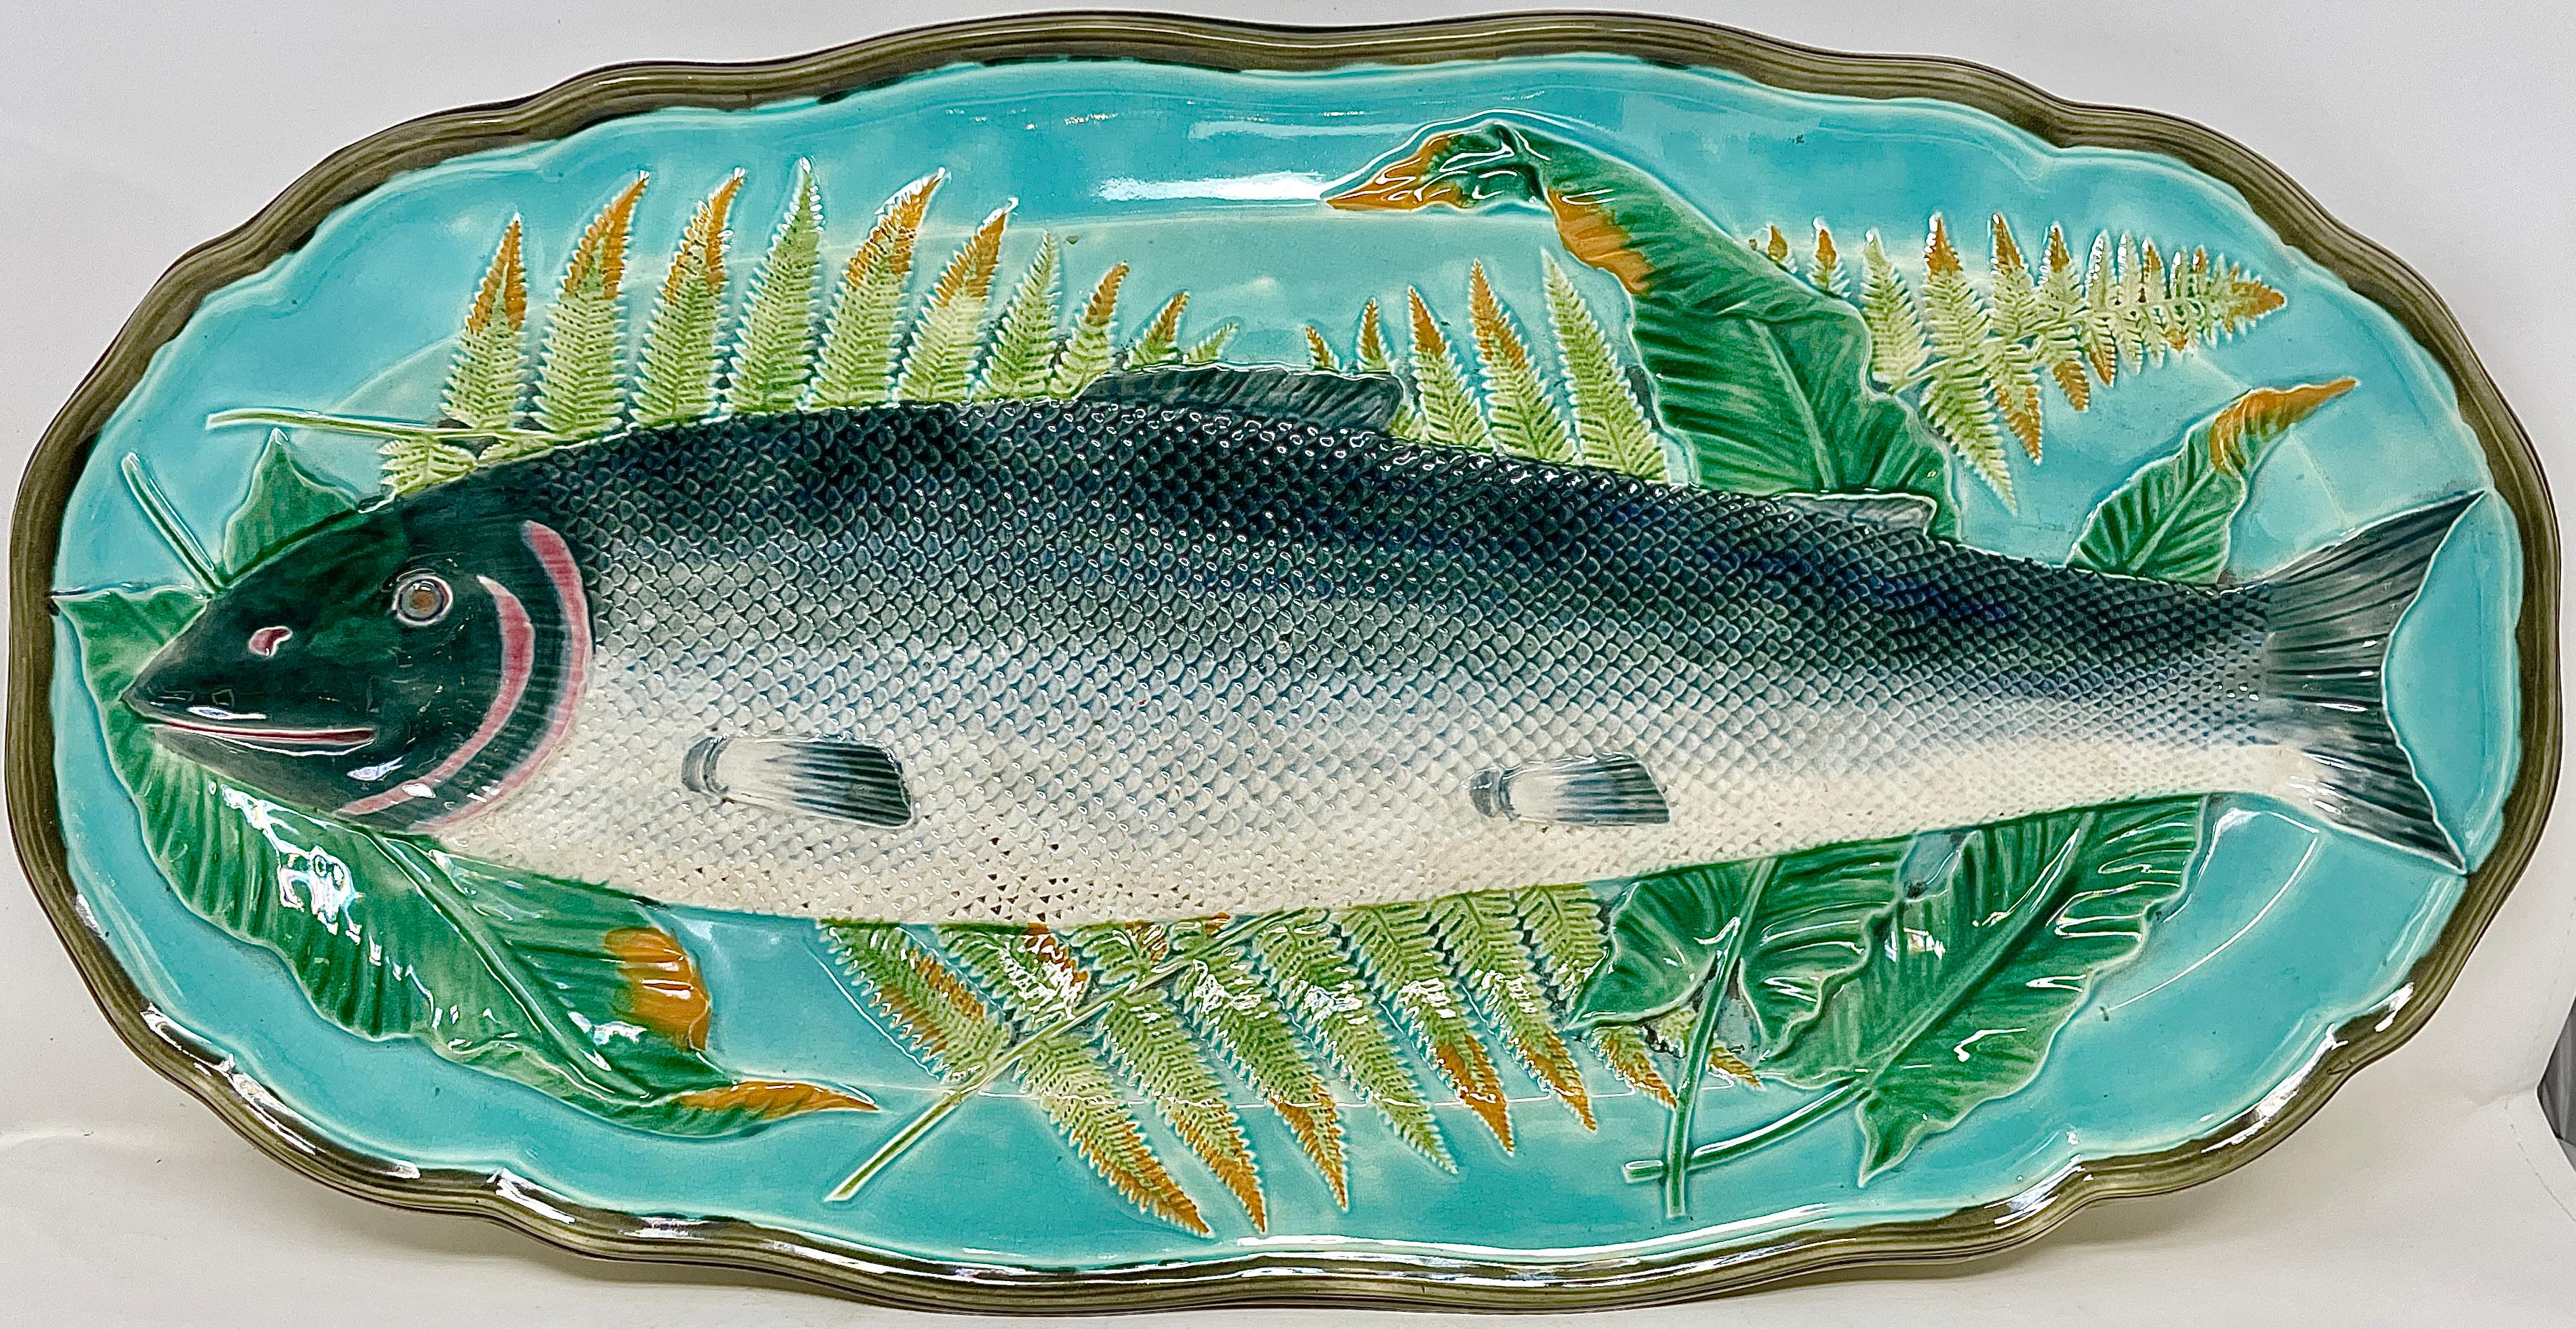 Porcelain Antique 19th Century English Wedgwood Majolica Fish Set, 1 Platter and 10 Plates